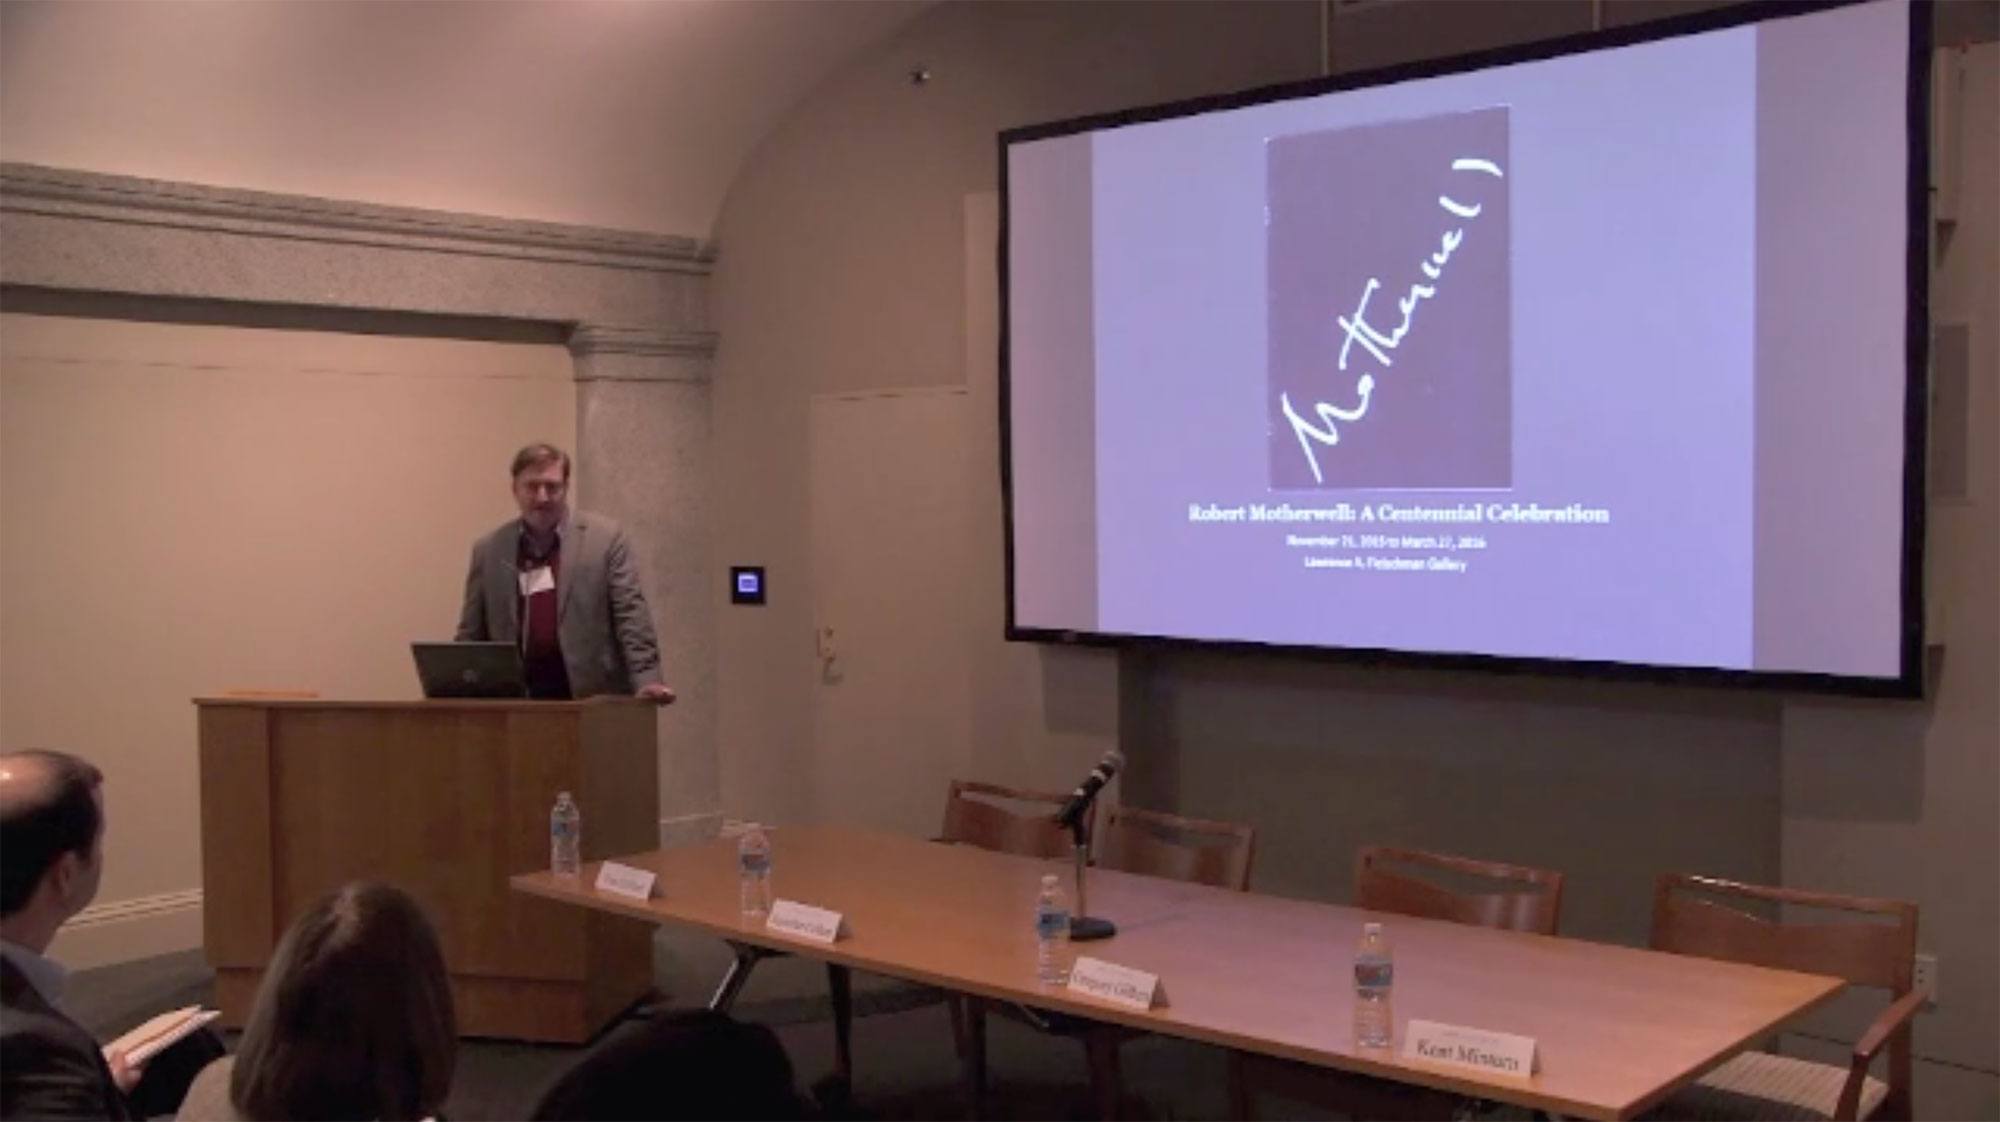 Tim Clifford on Motherwell: A Symposium on Robert Motherwell, 2015